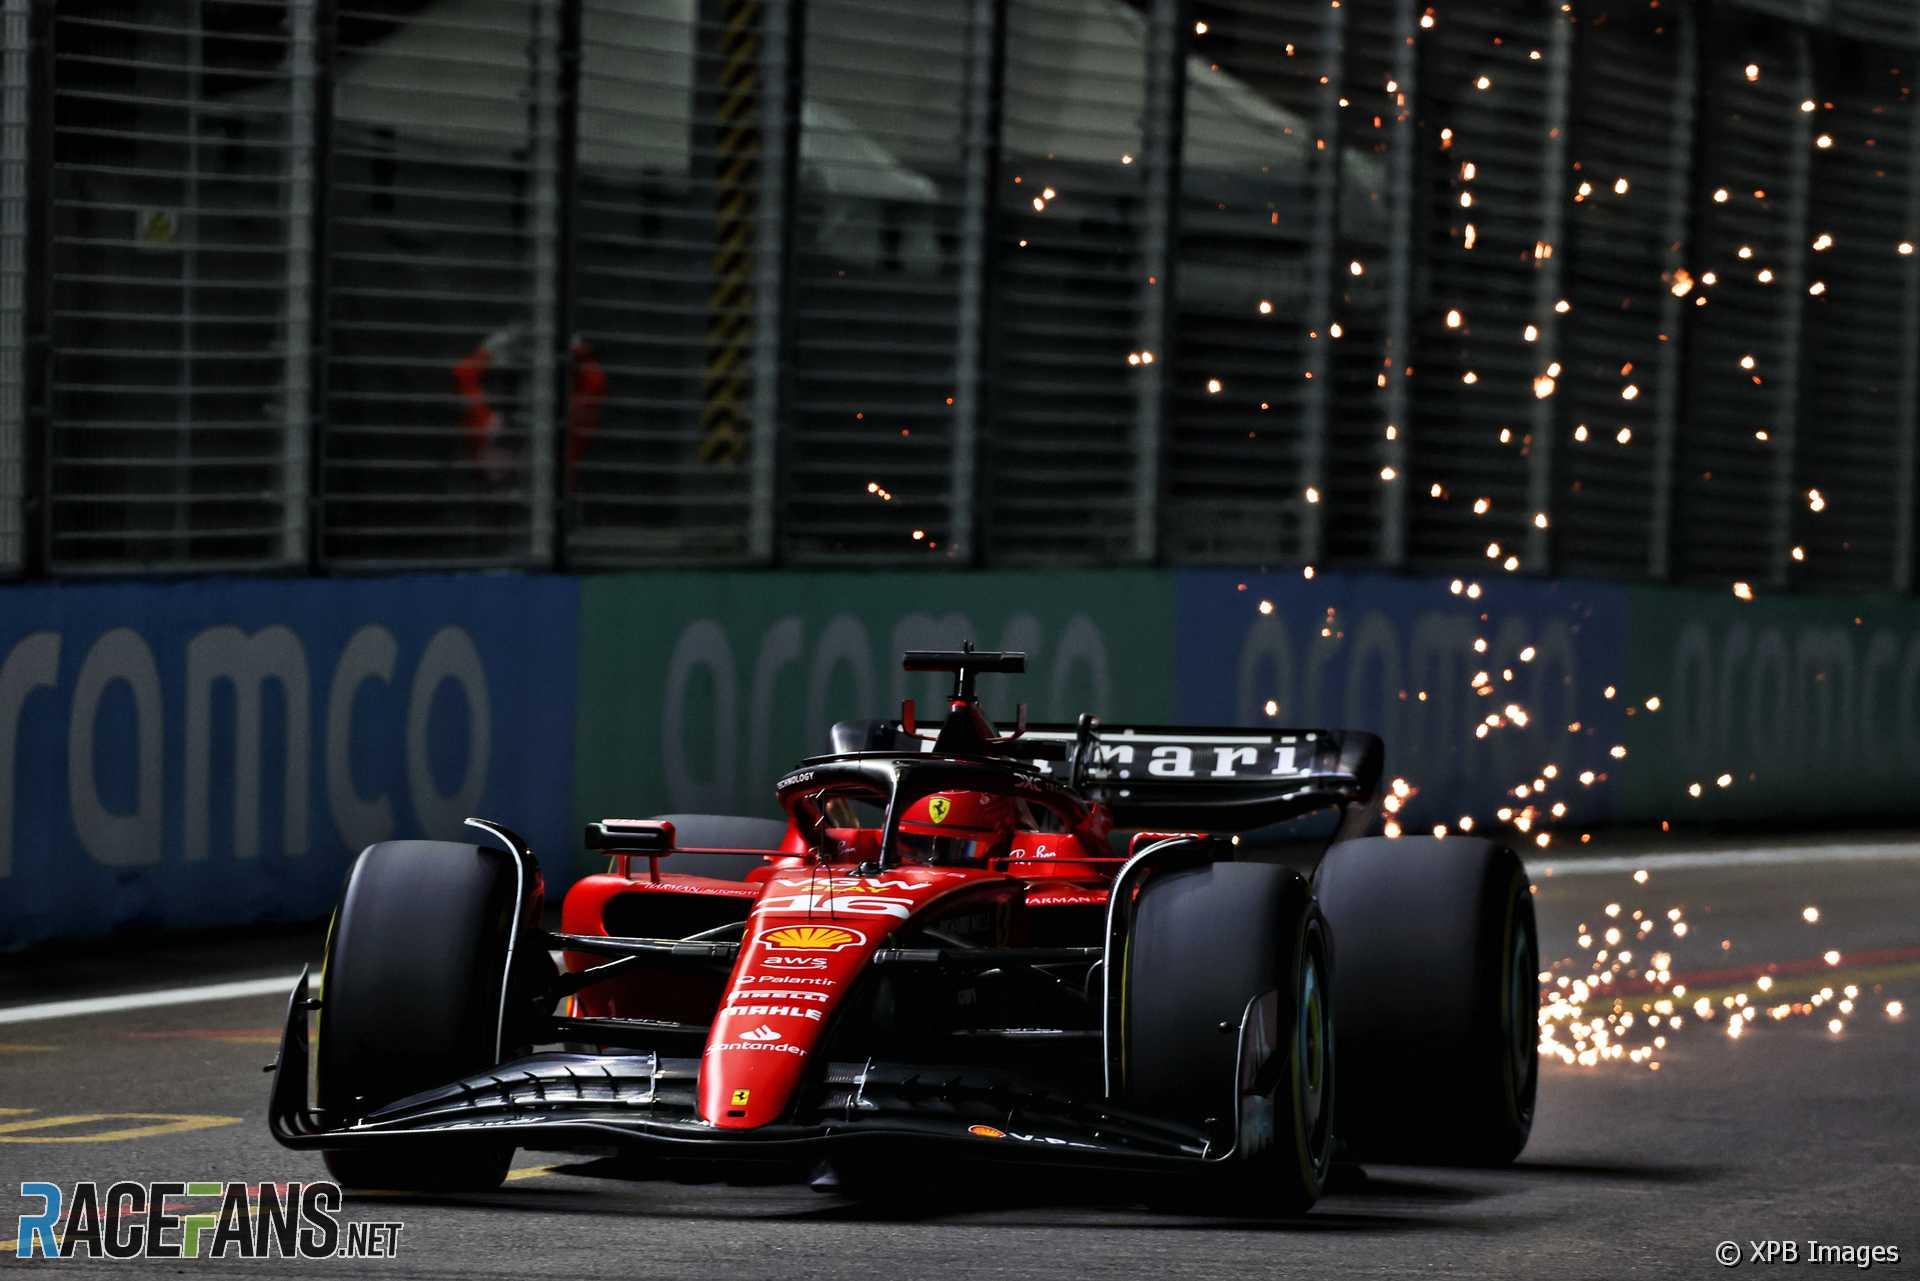 F1 Ferrari S Big Step Forward Brought Unwele Balance Change